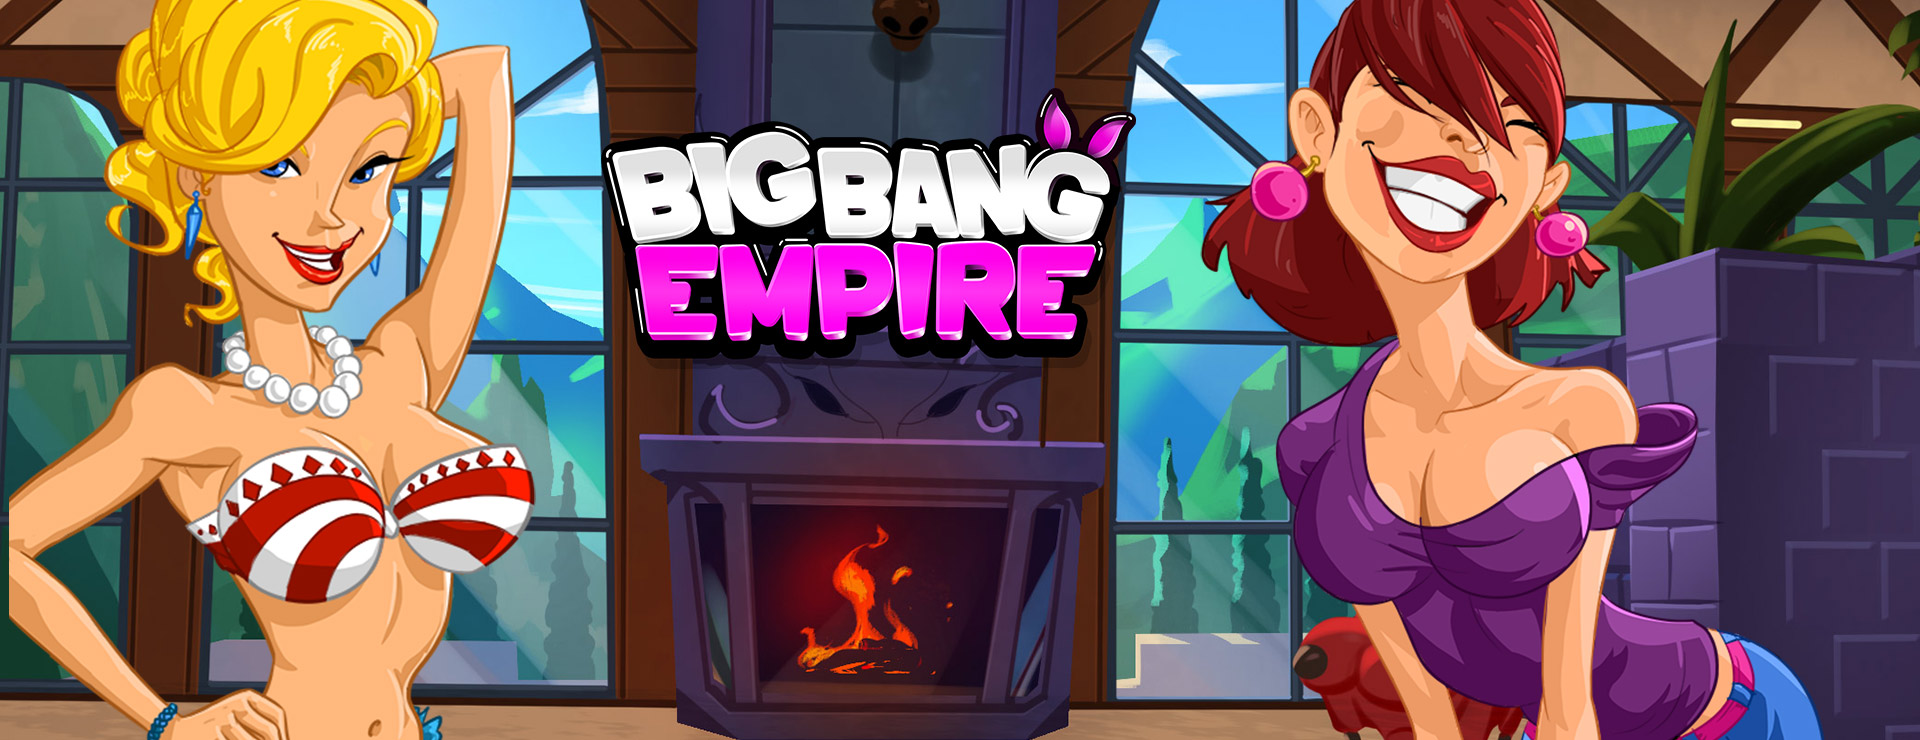 Big Bang Empire Online - RPG Game